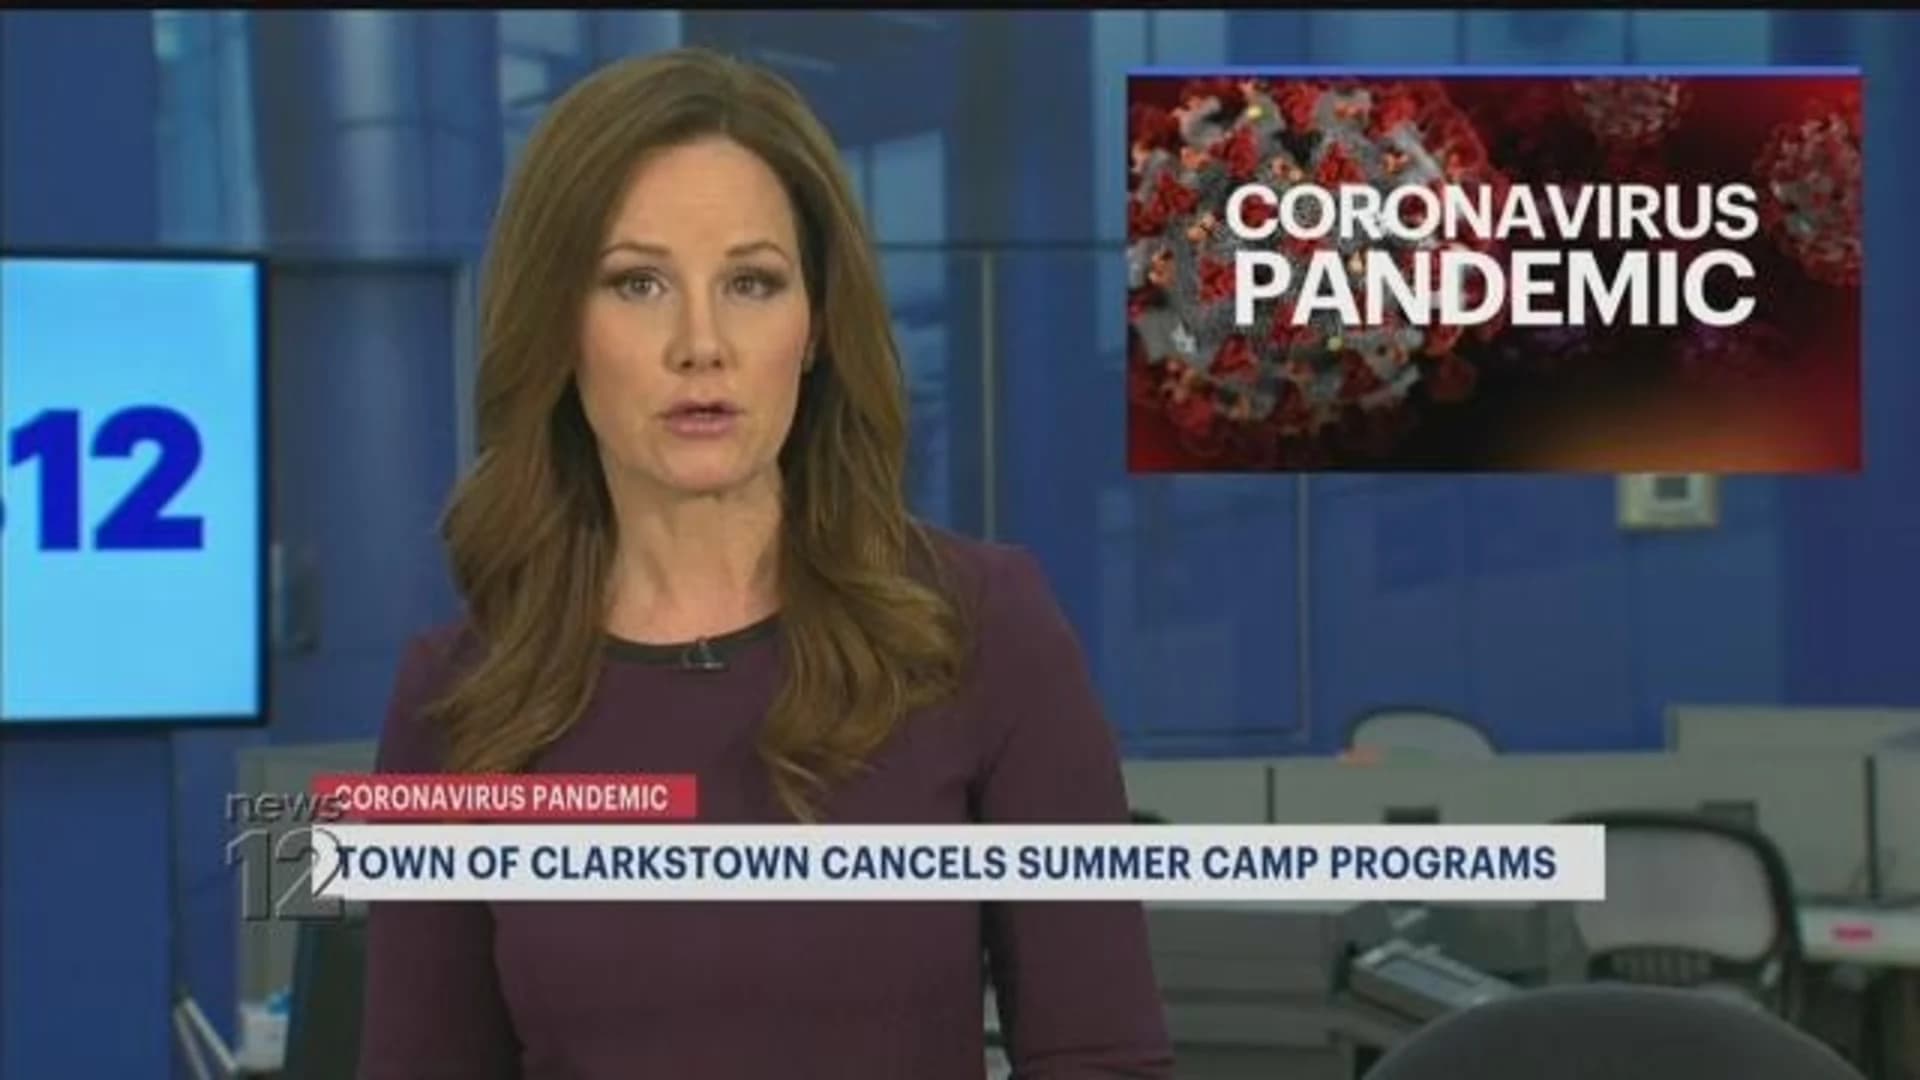 Clarkstown cancels 2020 summer camp programs